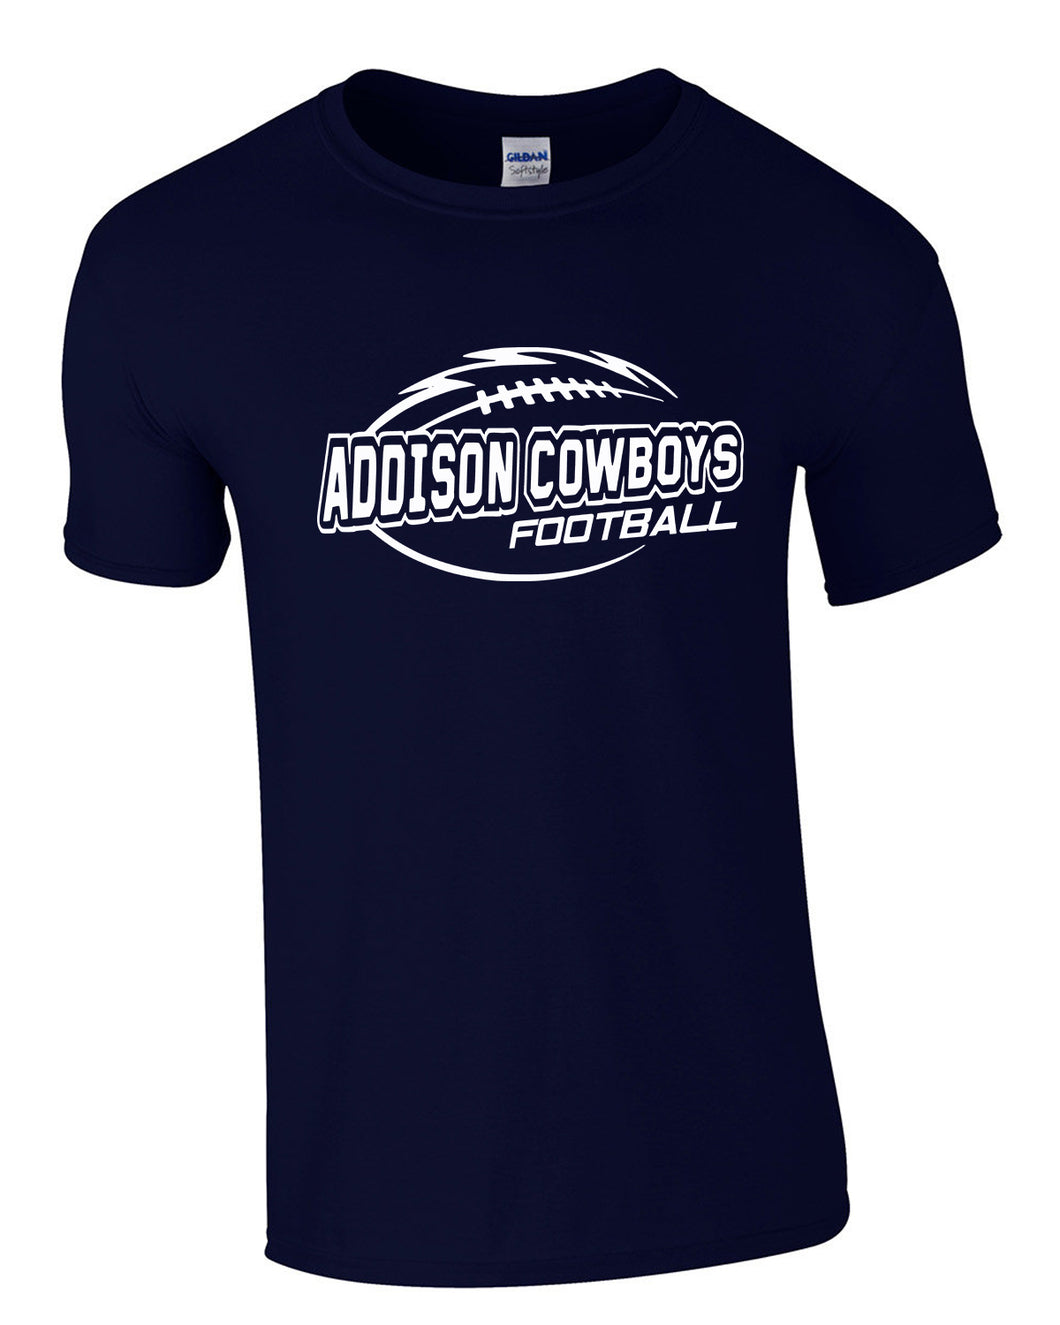 Addison Cowboys Football - T-shirt - ADULT